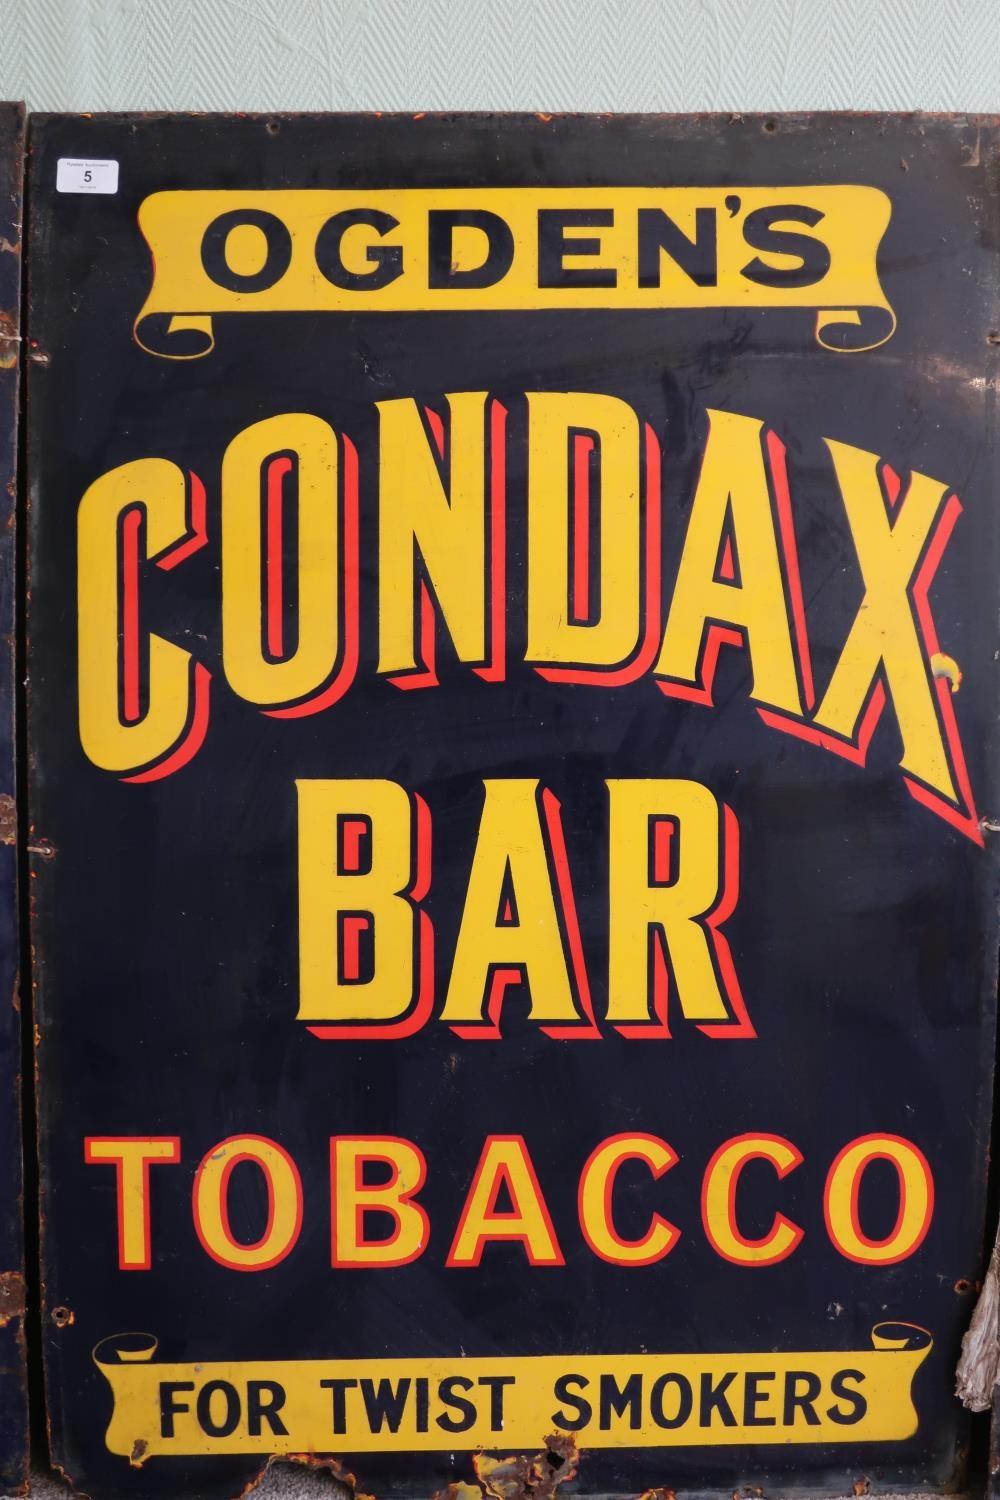 Vintage enamel advertising sign for Ogden's Condax Bar Tobacco (61cm x 91cm)